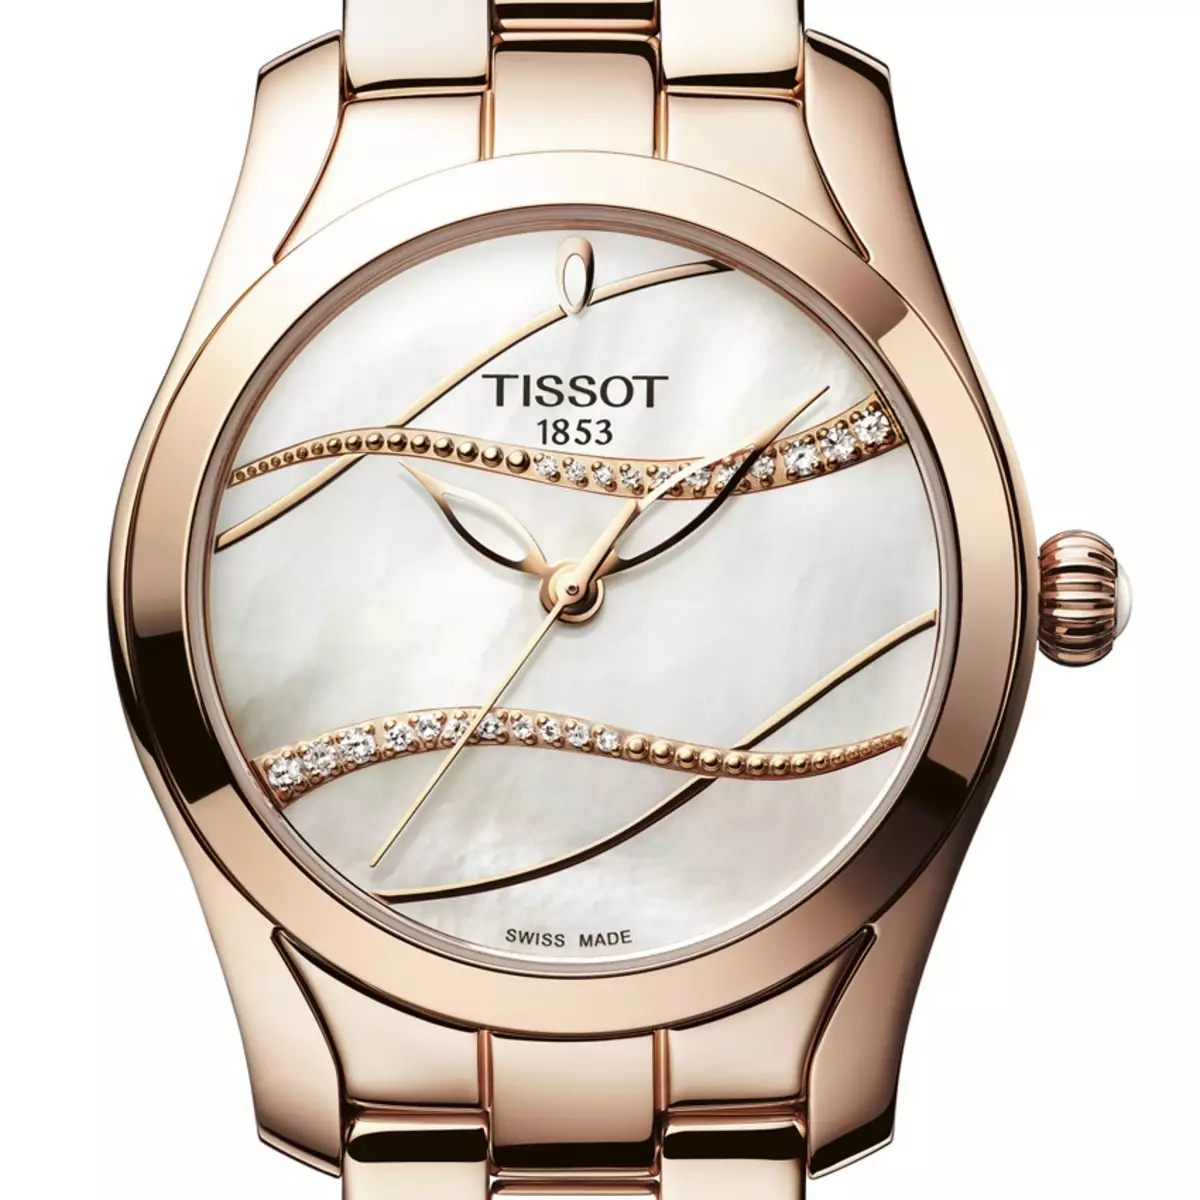 Tissot Watch (83 사진) : 여성의 손목 스위스 모델, 기계 골드 및 석영, 회사의 비용 및 리뷰 3535_55